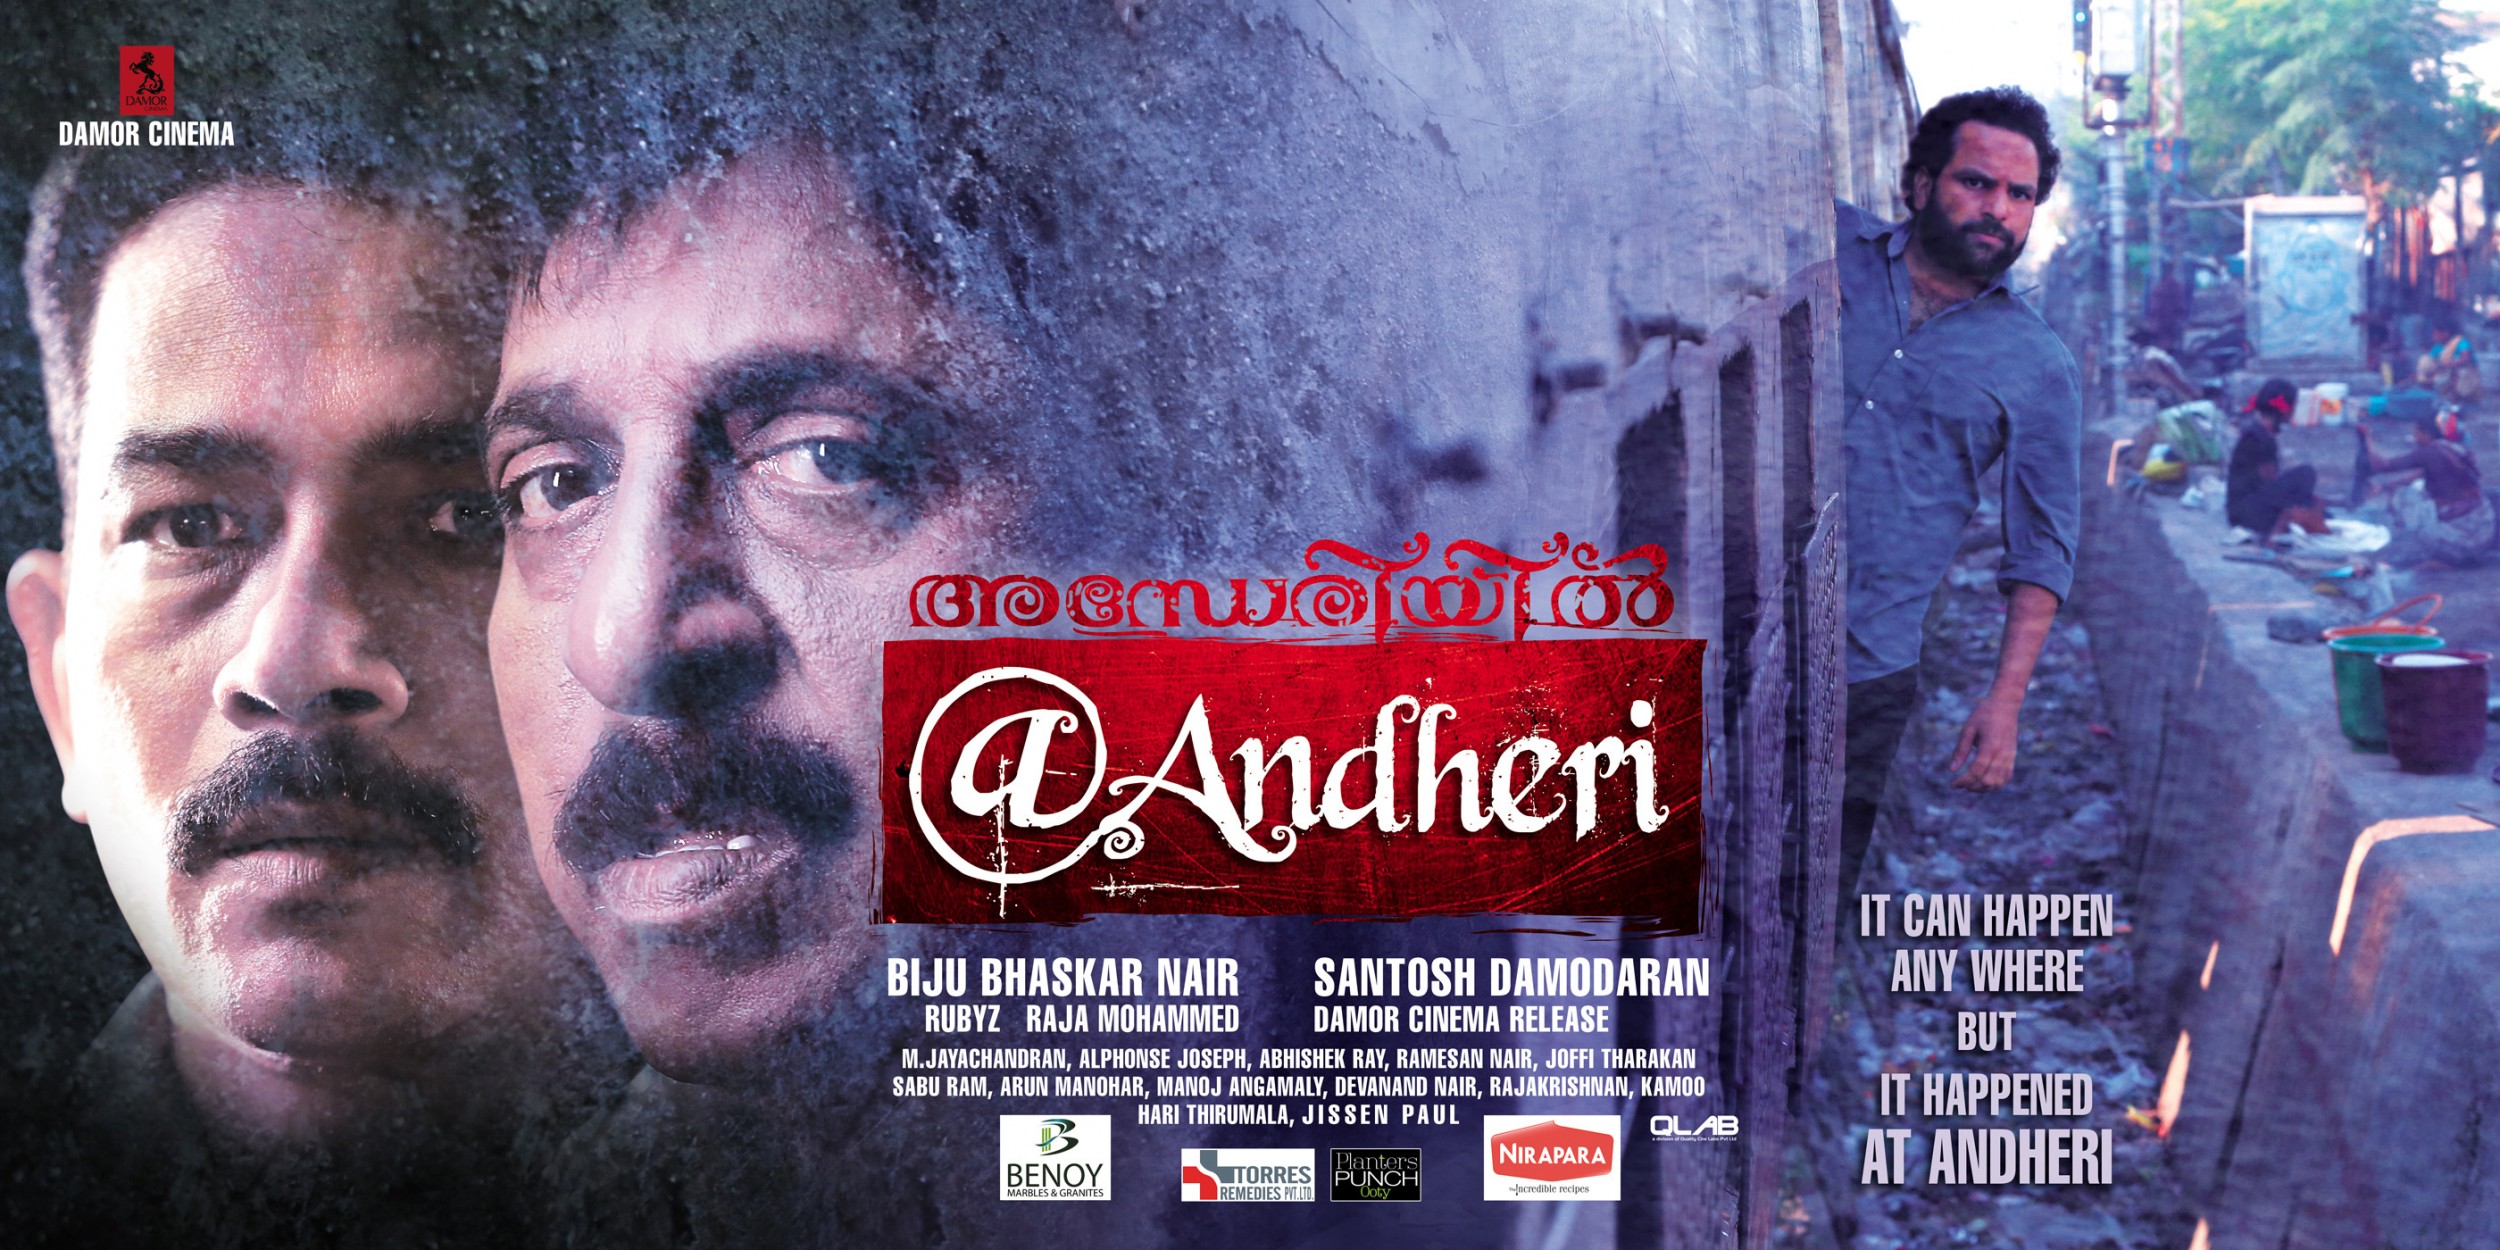 Mega Sized Movie Poster Image for Andheri (#2 of 2)